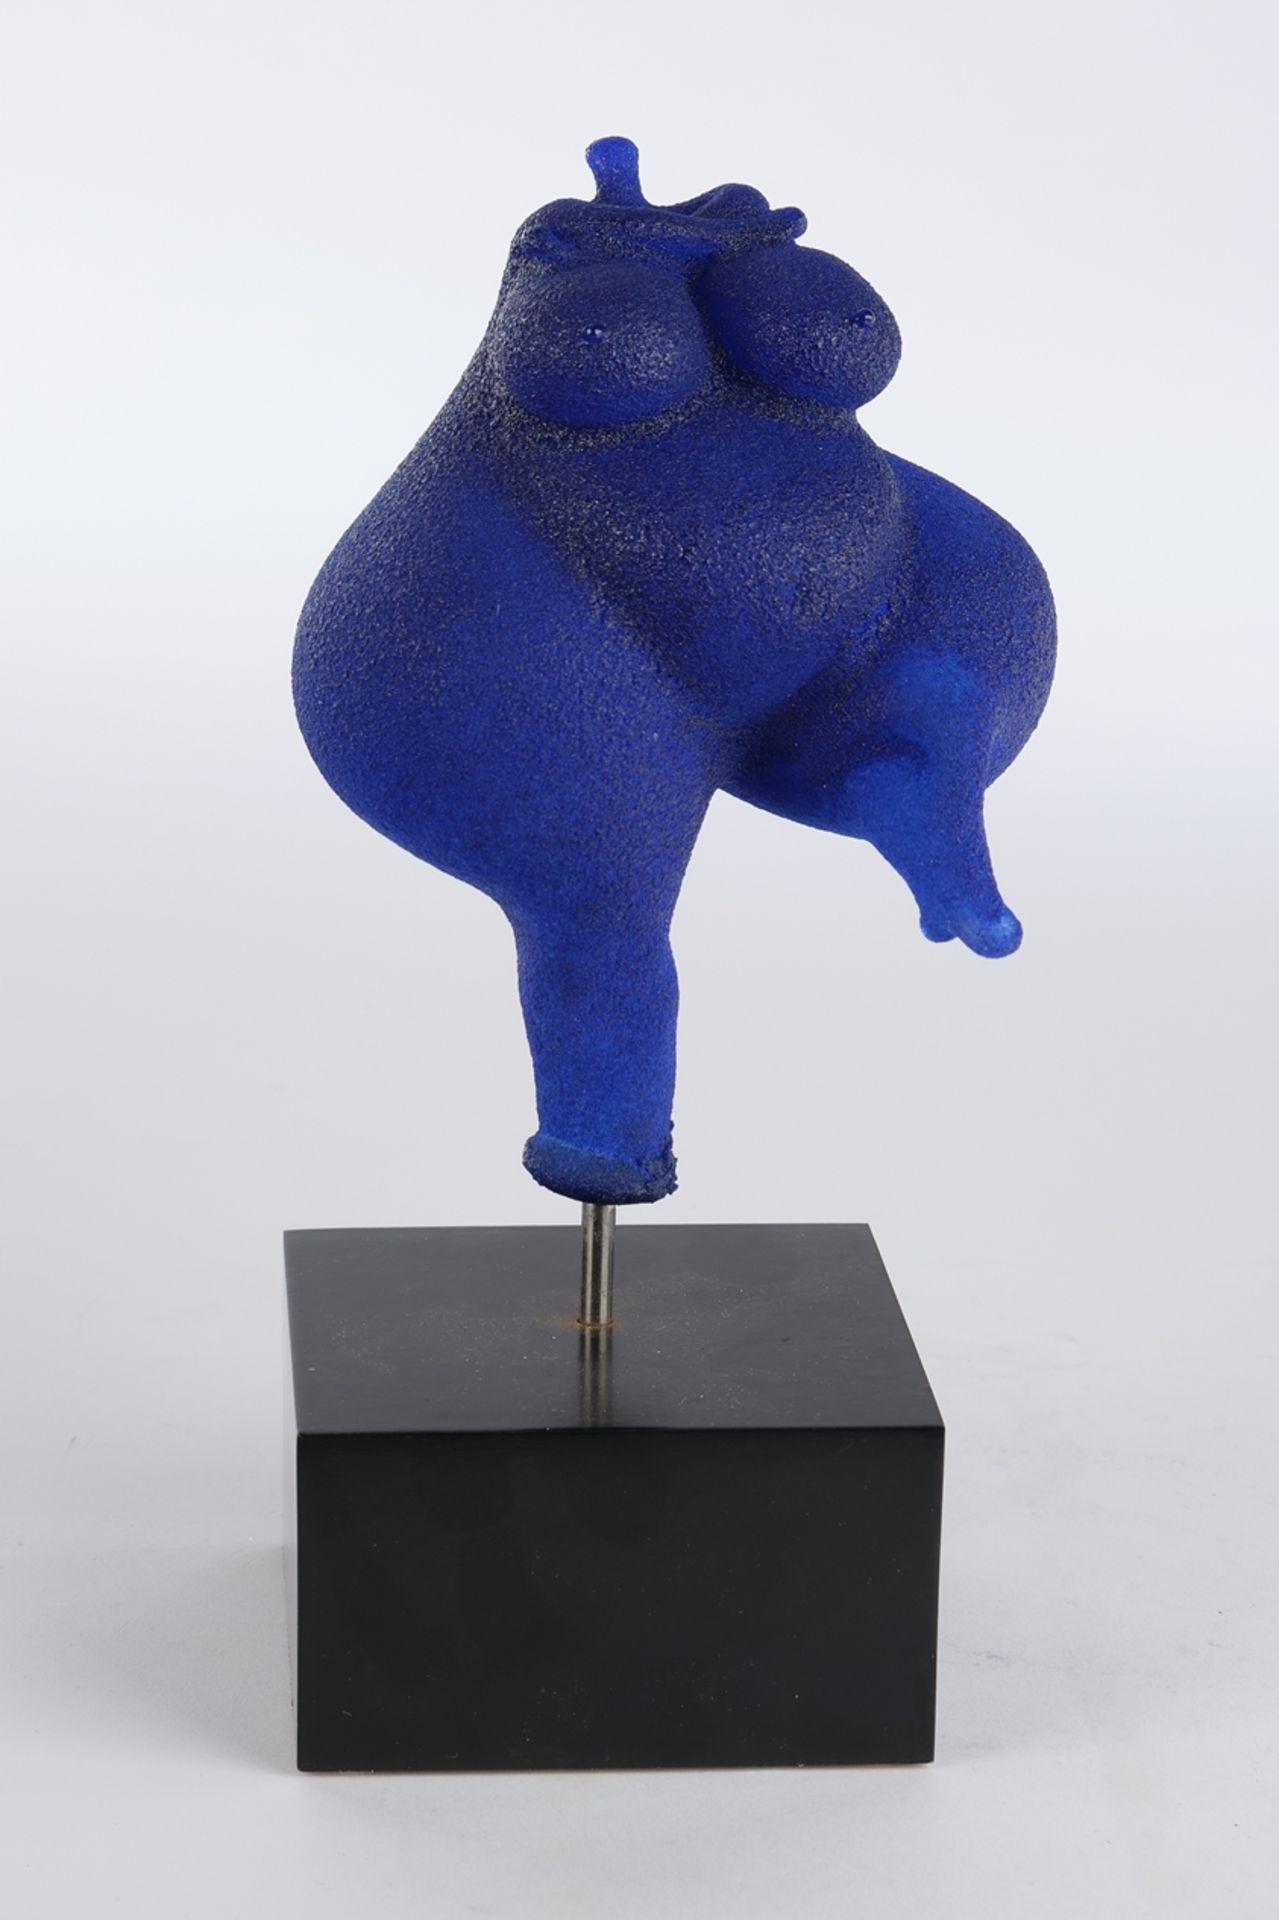 Engman, Kjell, Kosta Boda, "Blue People", Glasskulptur, blau, weiblicher Torso, an Metallstange auf